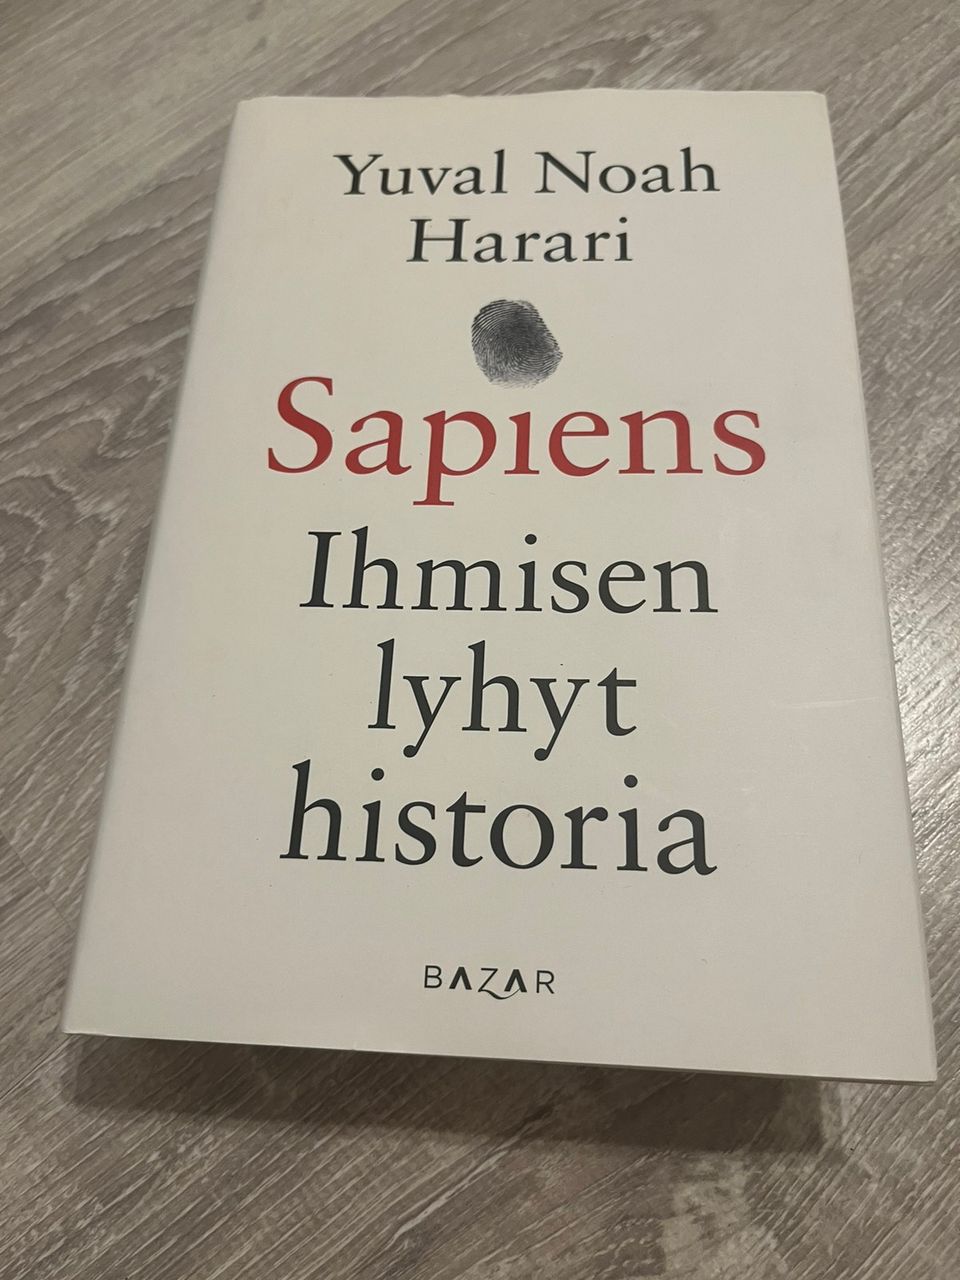 Yuval Noah Harari - Sapiens, ihmisen lyhyt historia